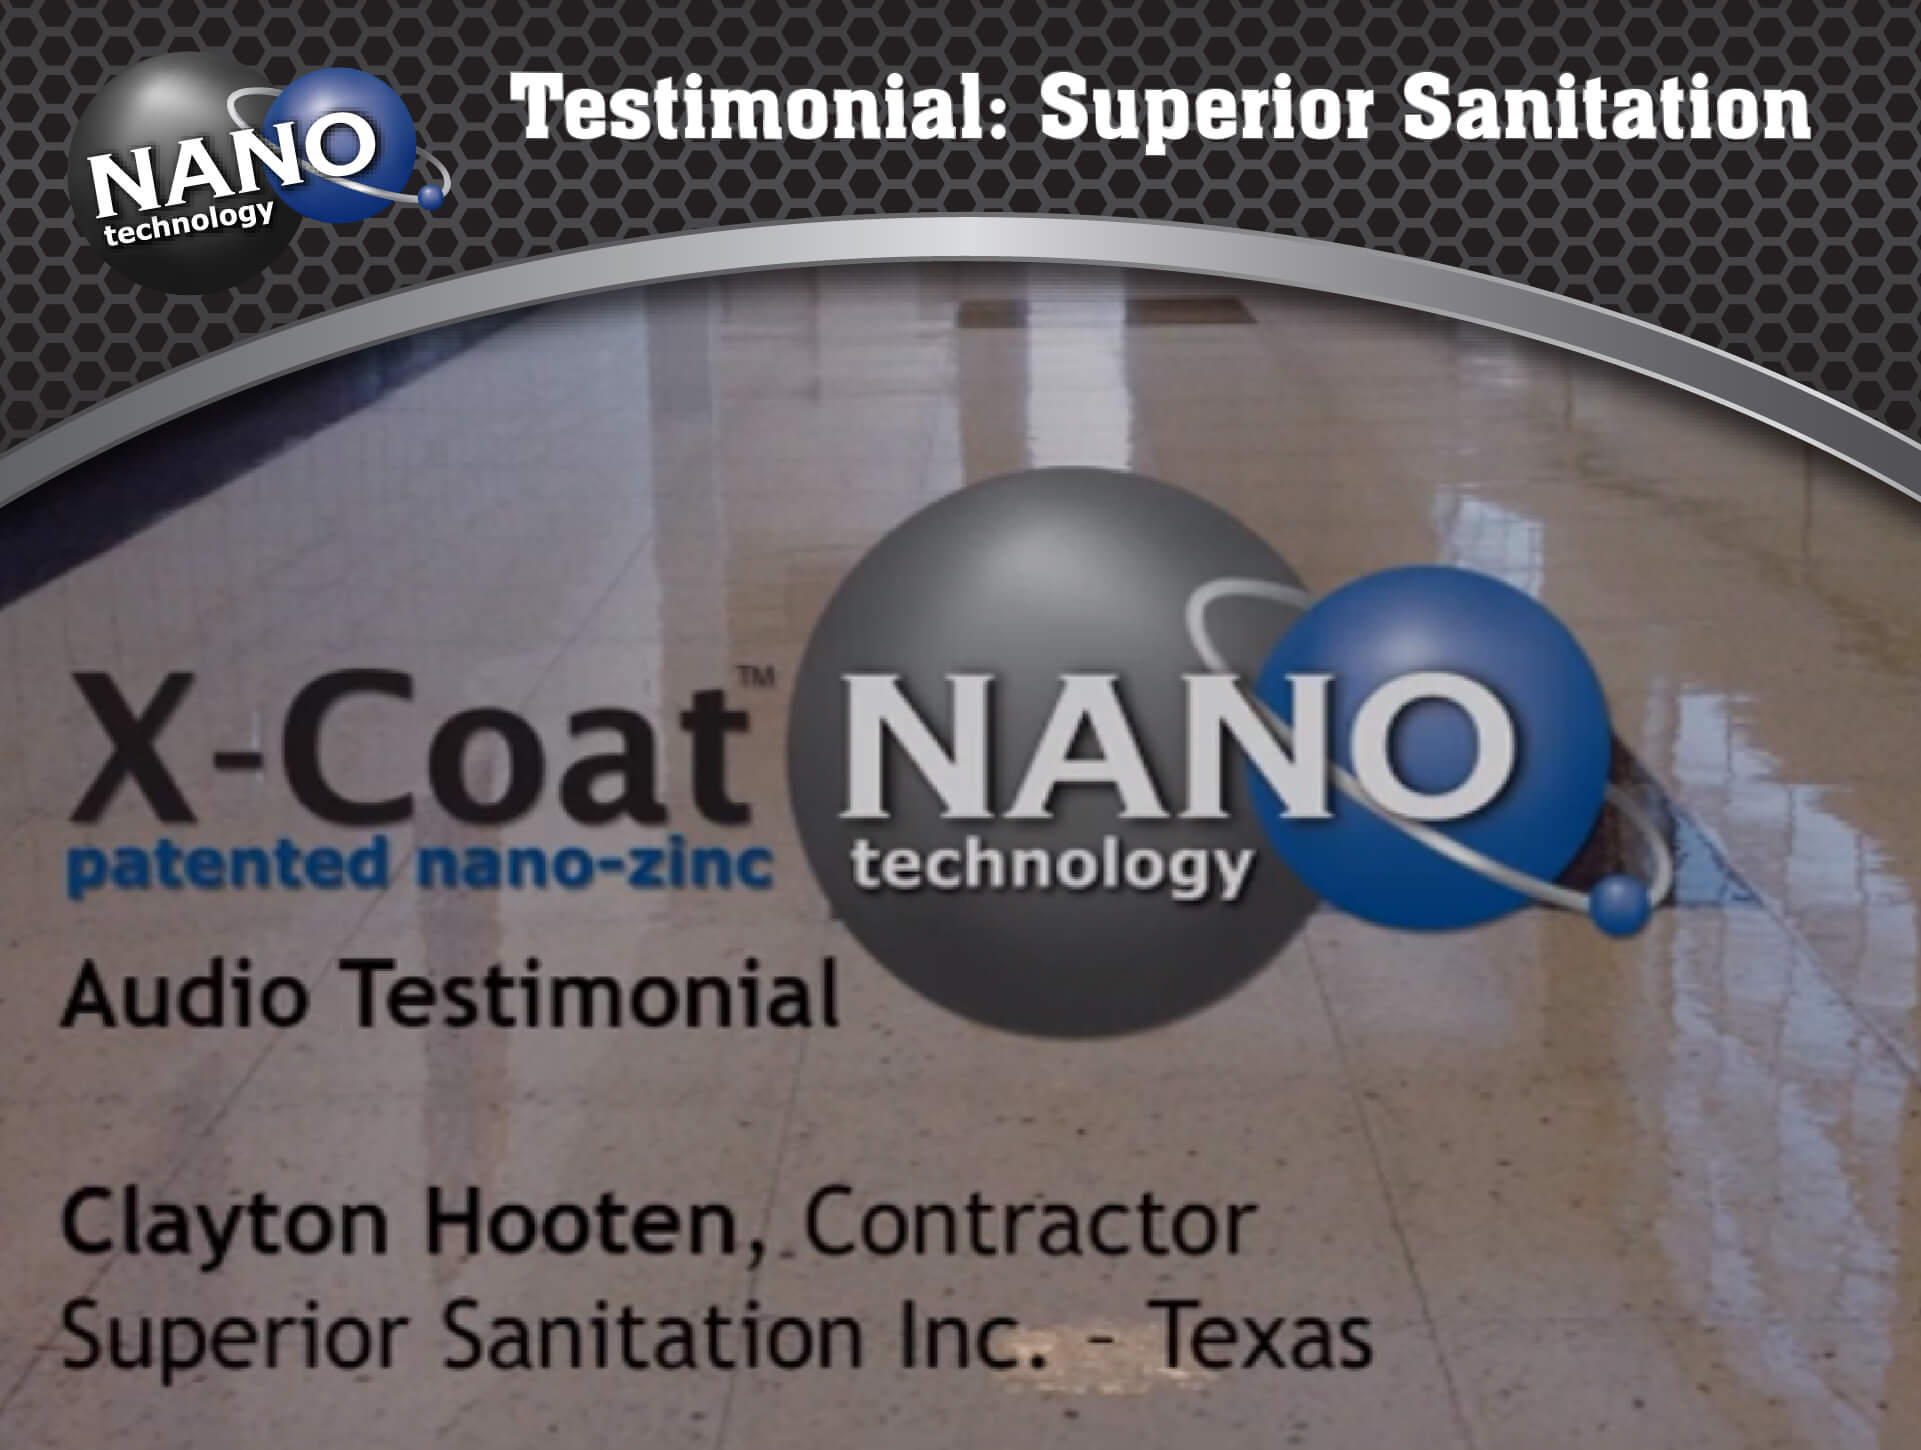 X-Coat Nano Testimonial Superior Sanitation